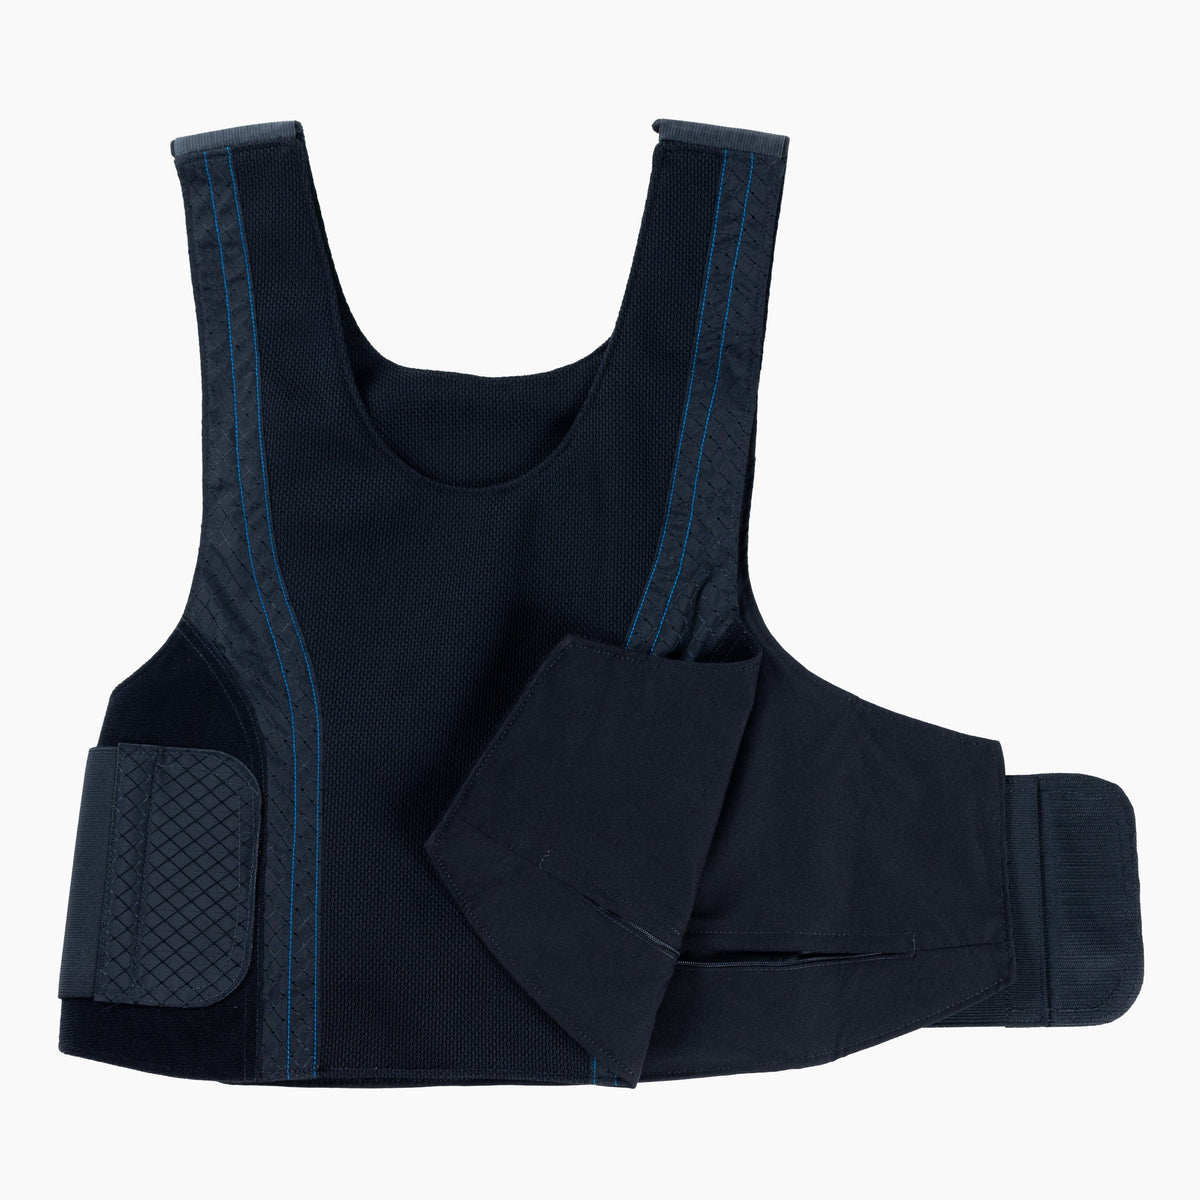 Concealable Body Armor Vest Carrier - Premier Body Armor